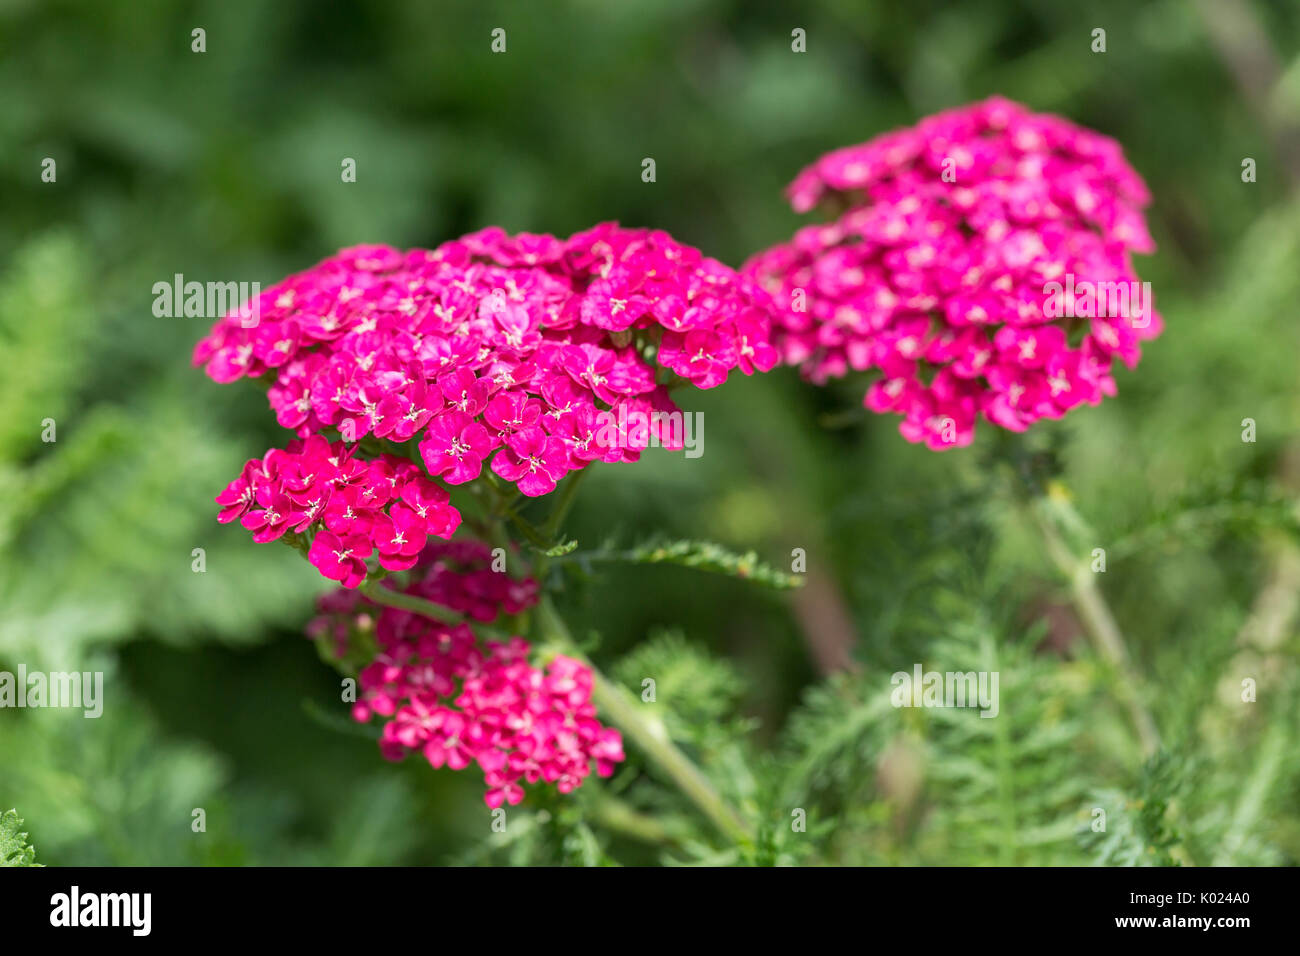 https://c8.alamy.com/comp/K024A0/pink-yarrow-flowers-growing-in-the-garden-K024A0.jpg